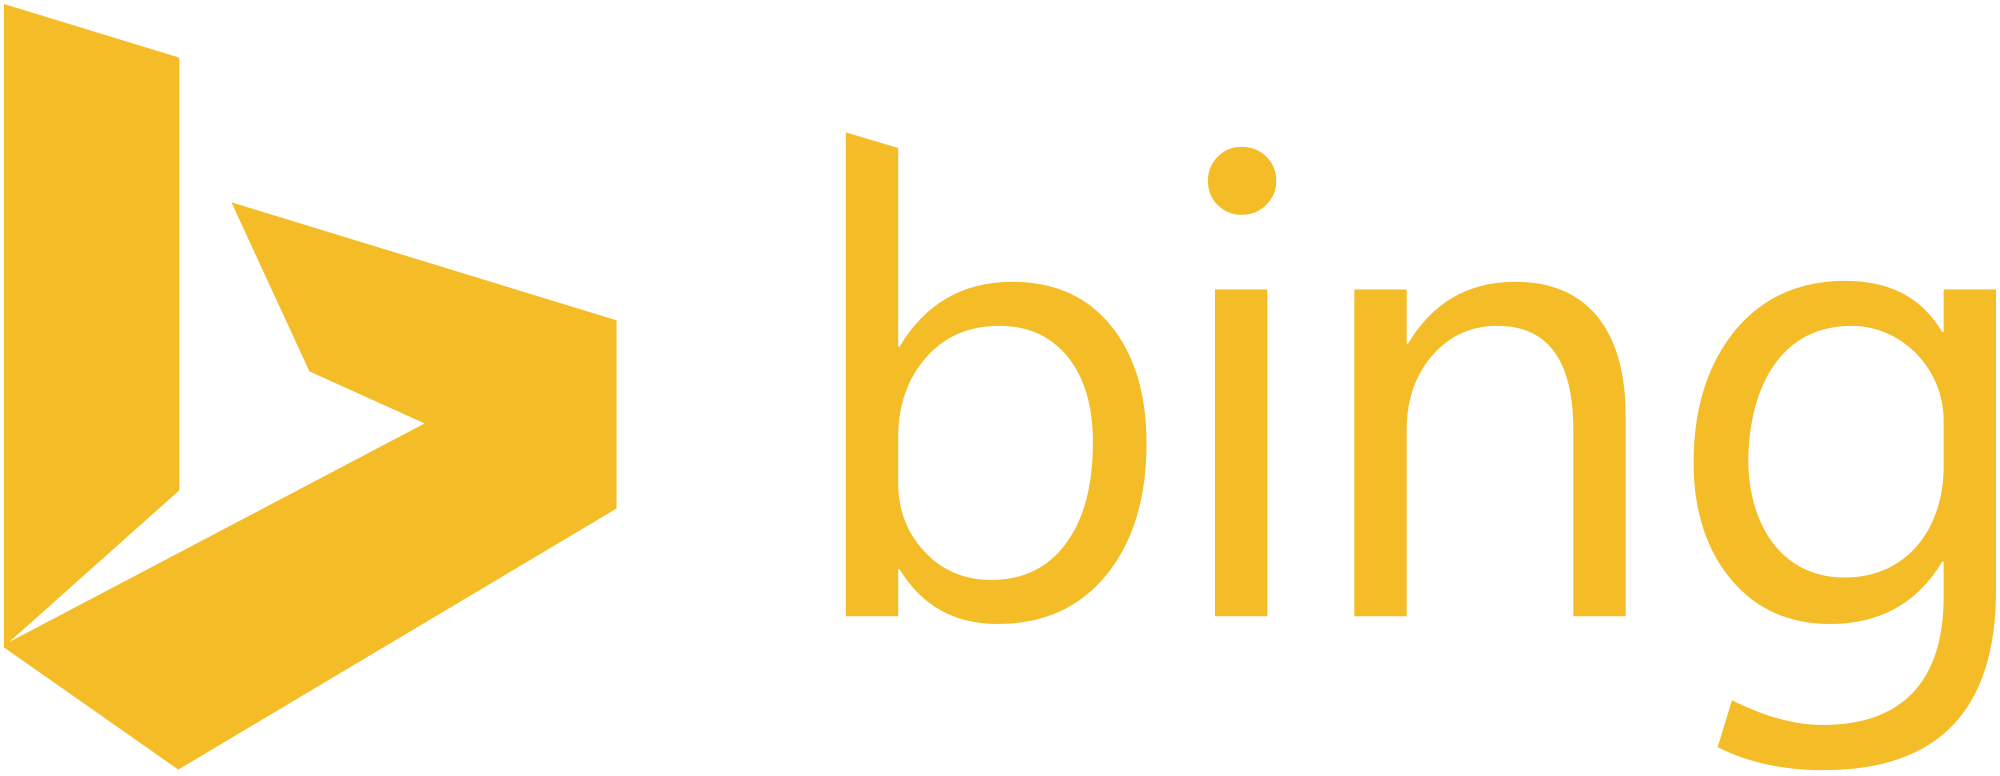 Bing_logo_(2013).svg